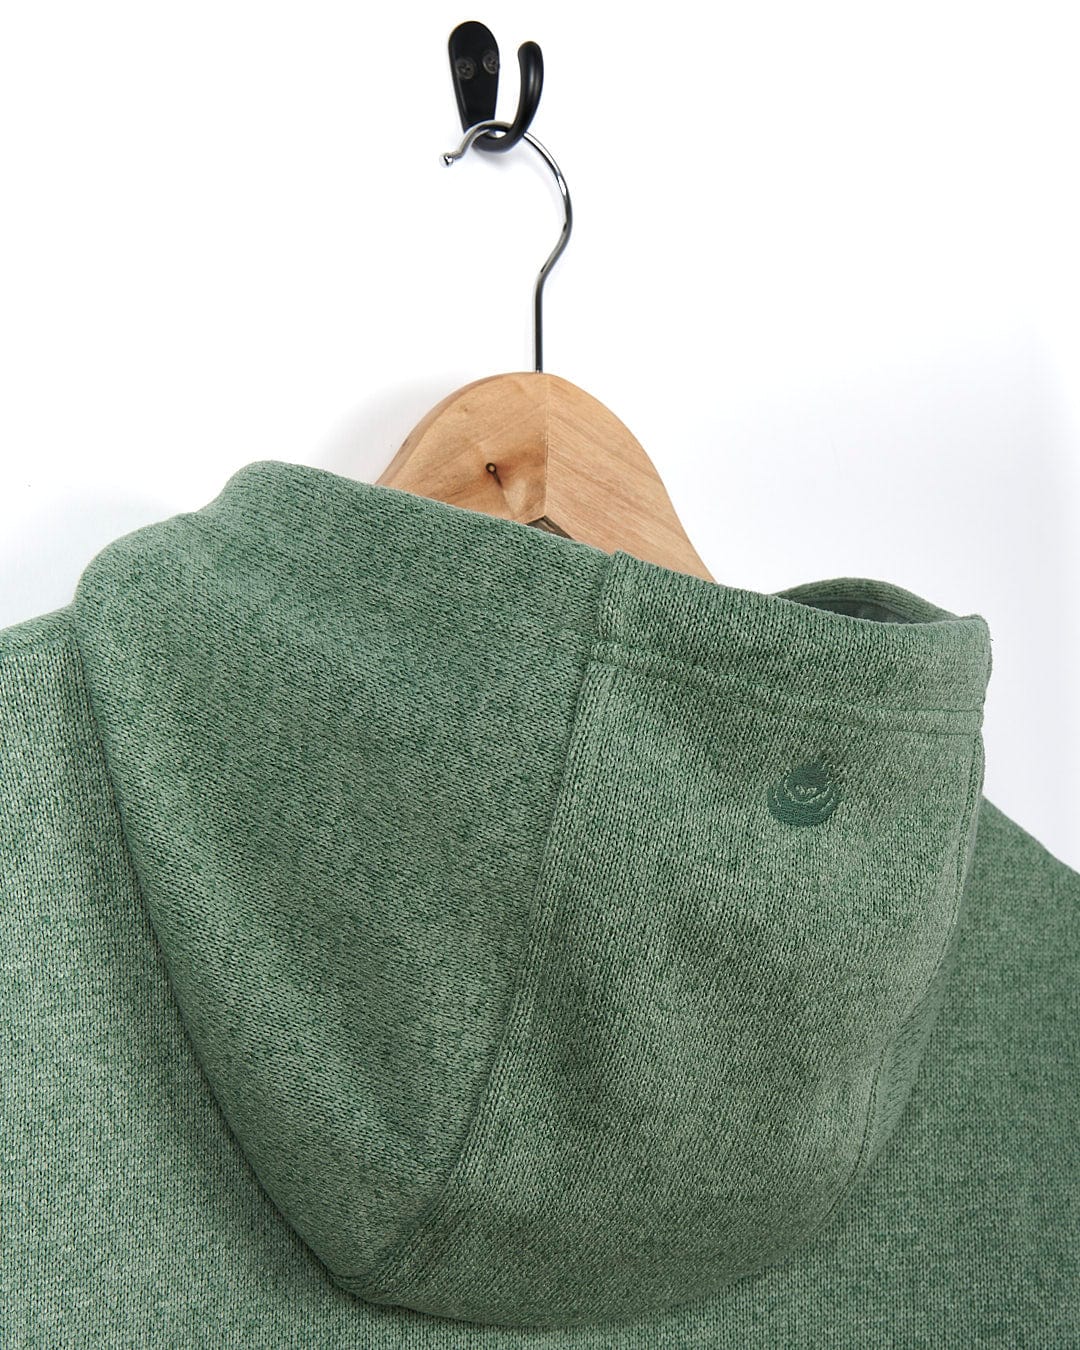 A Saltrock Galaksea - Womens 1/4 Zip Fleece - Light Green hoodie hanging on a hanger.